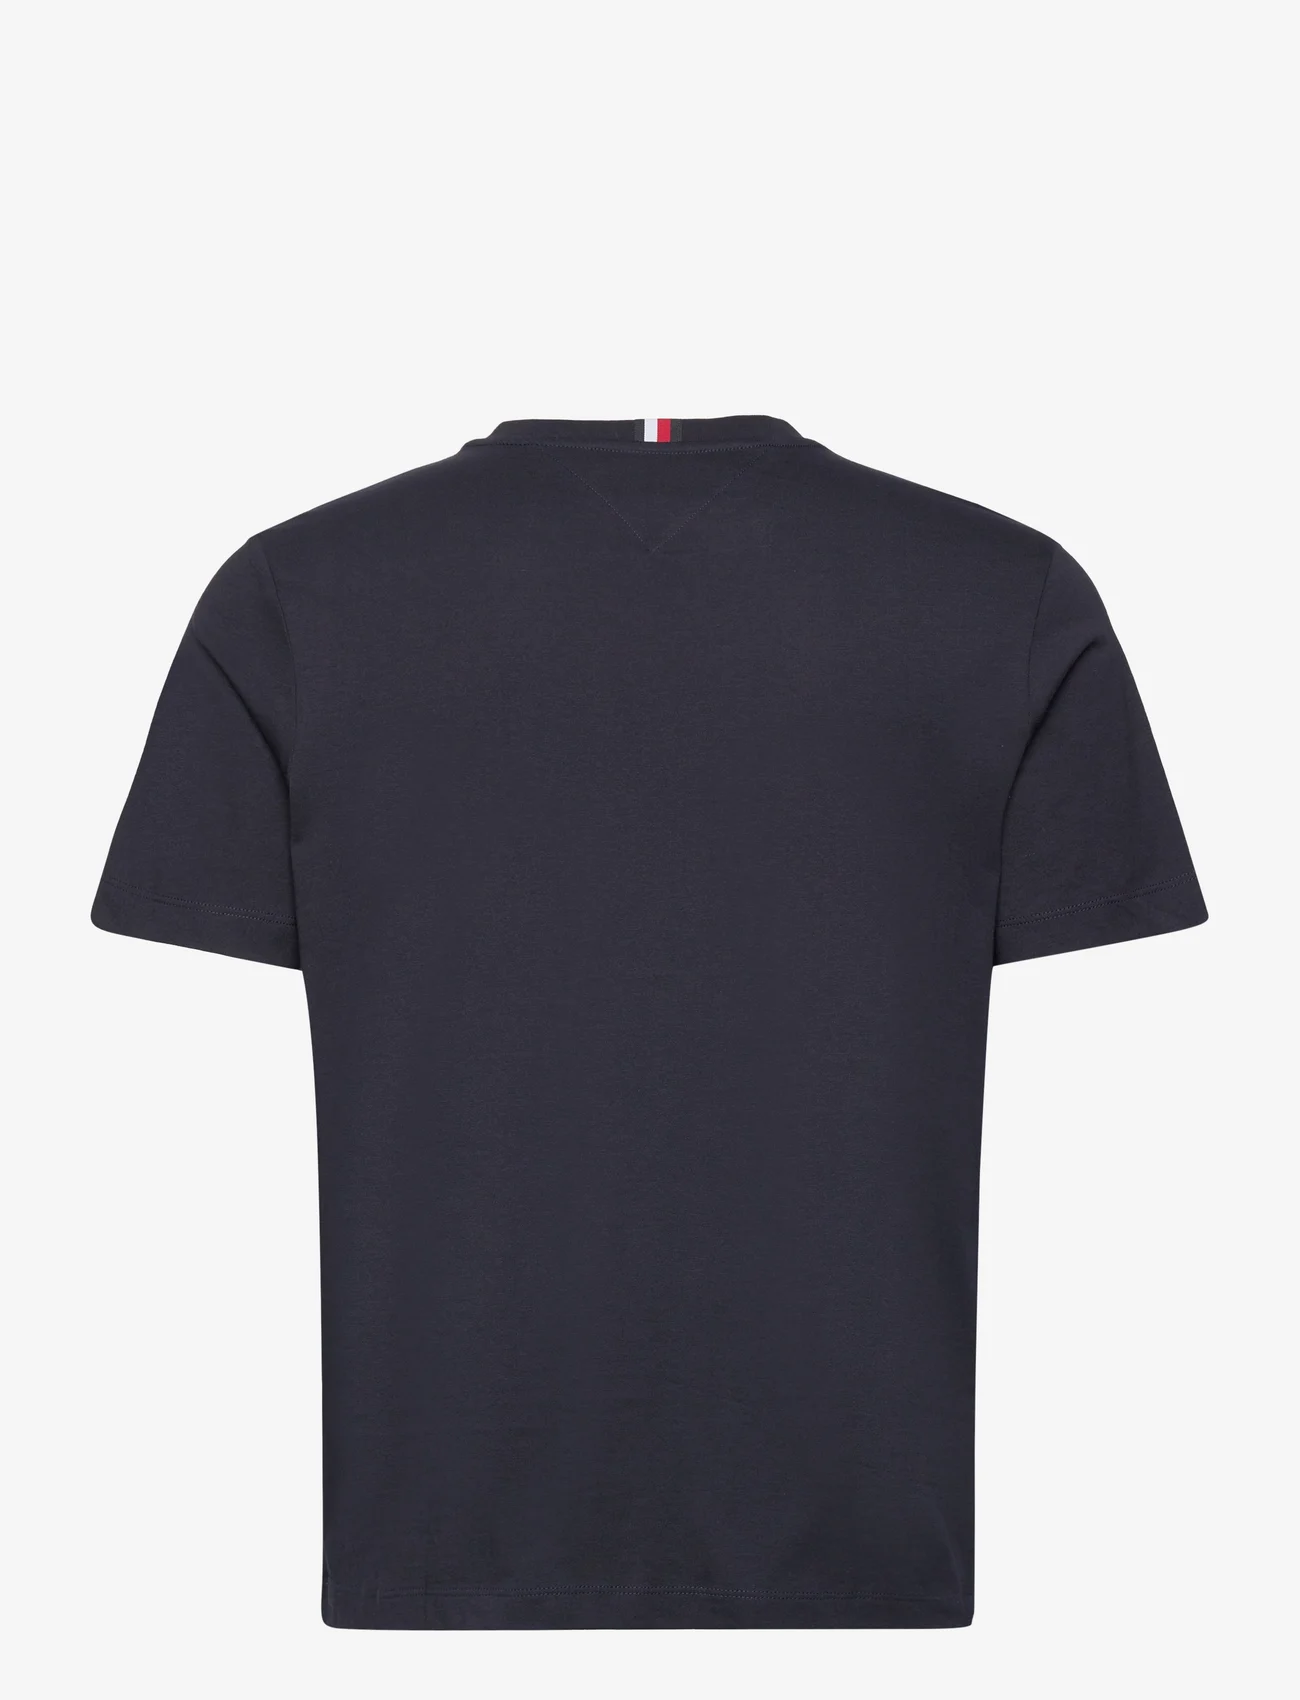 Tommy Hilfiger - MONOTYPE CHEST STRIPE TEE - basic t-shirts - desert sky - 1